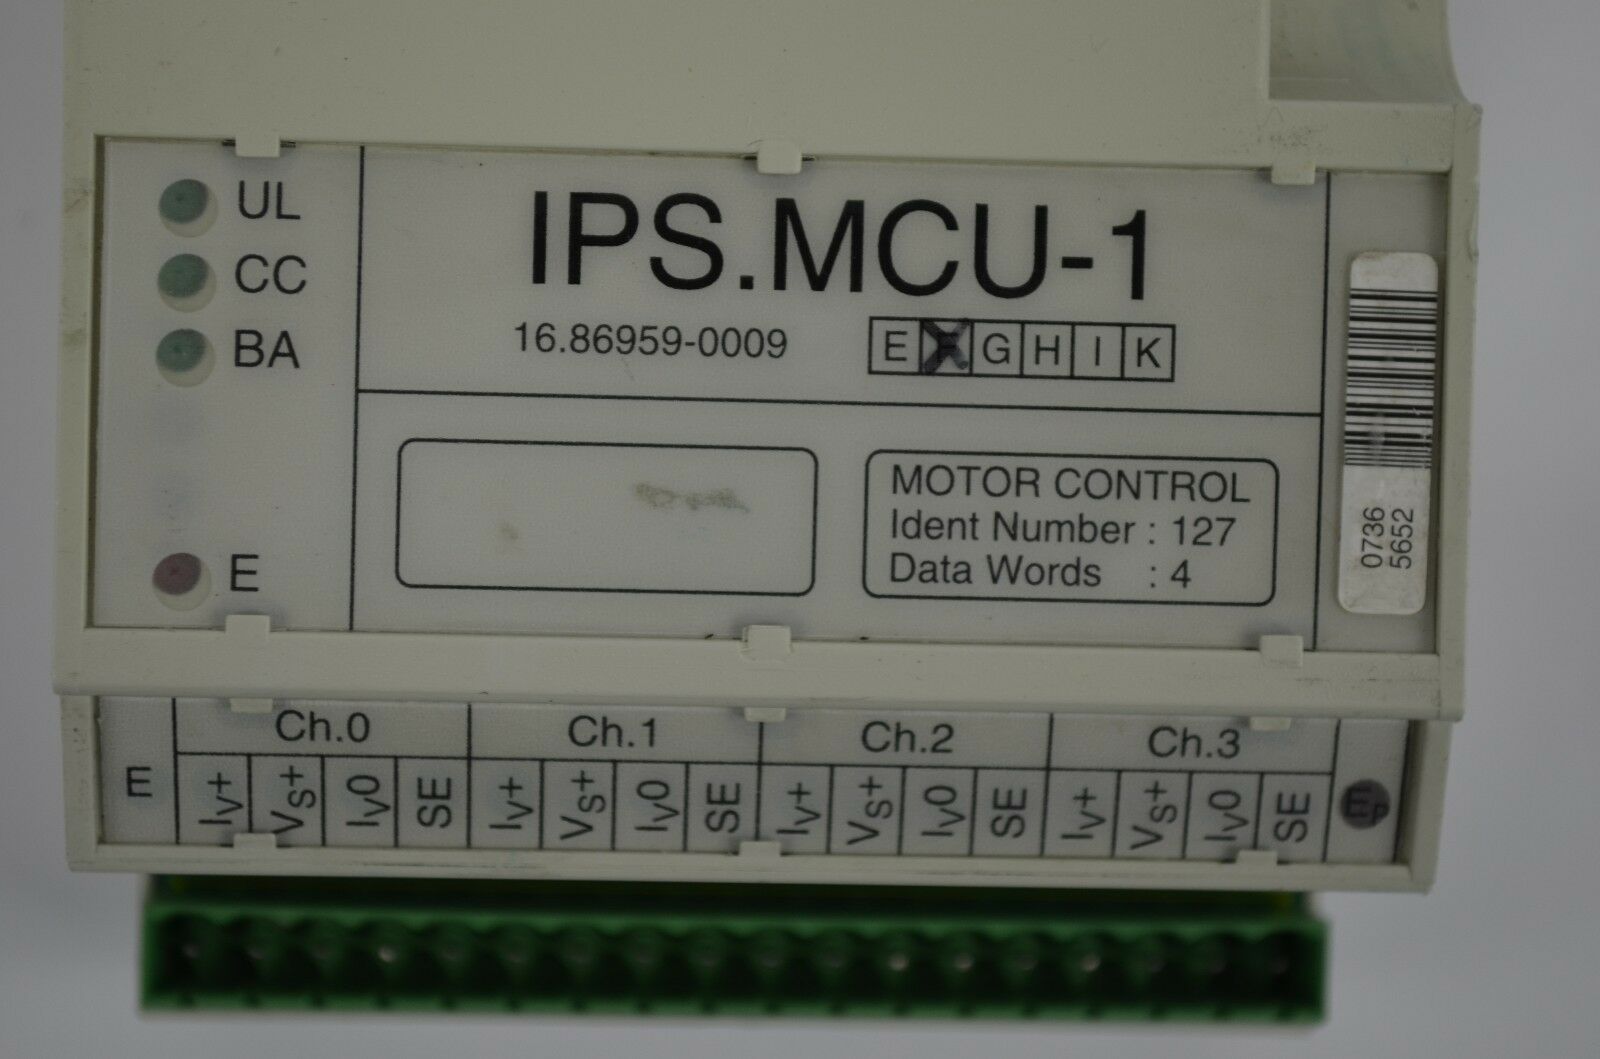 MAN Roland IPS.MCU-1 Stand F